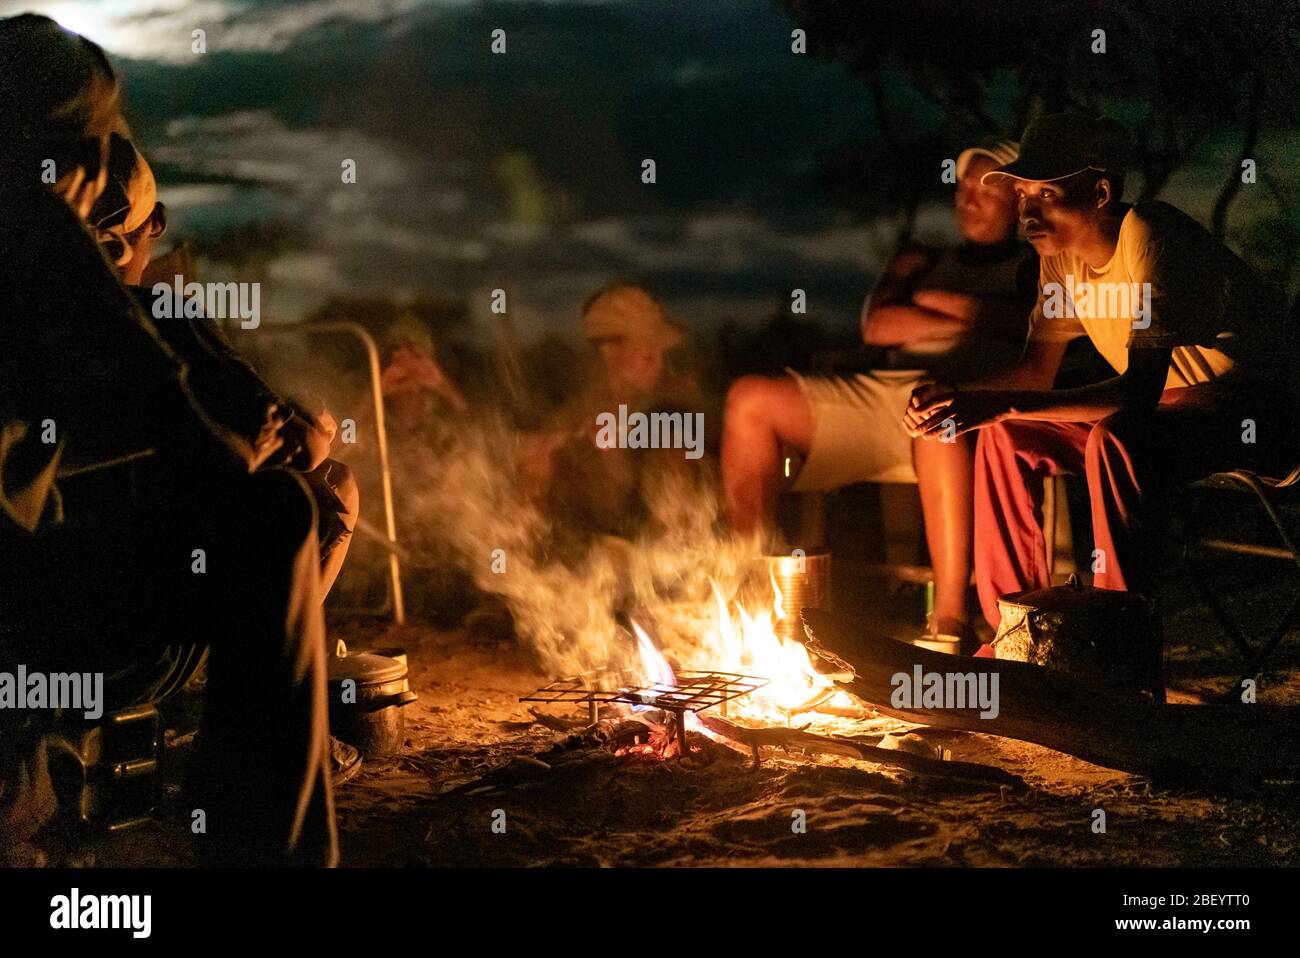 Jo/hoansi men gather around the fire and tell stories in Nyae Nyae, Namibia. Stock Photo